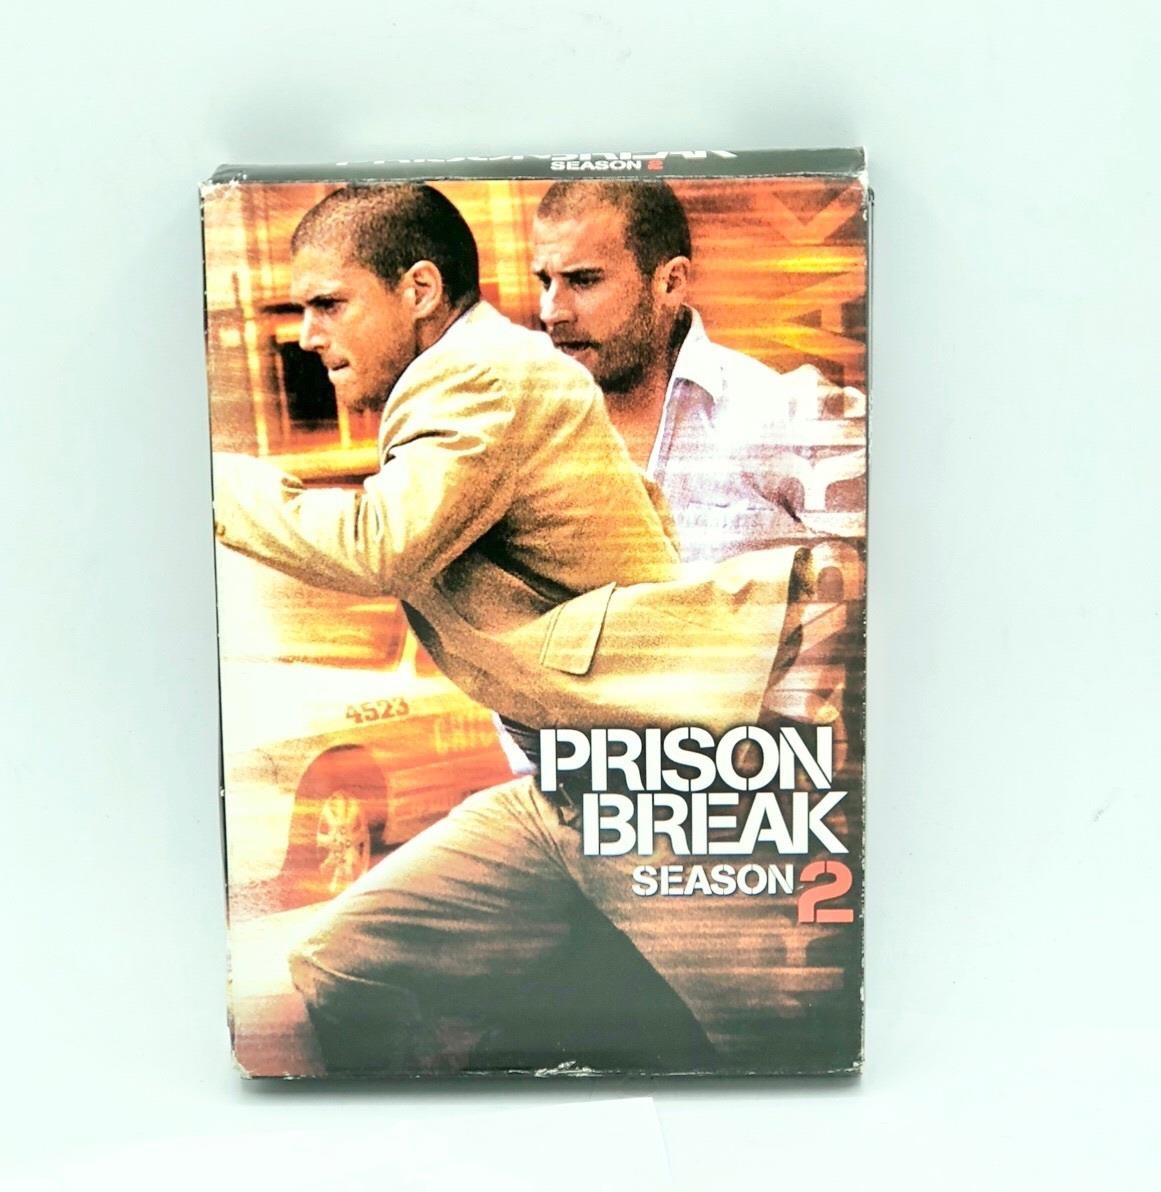 Prison break season 2 (DVD